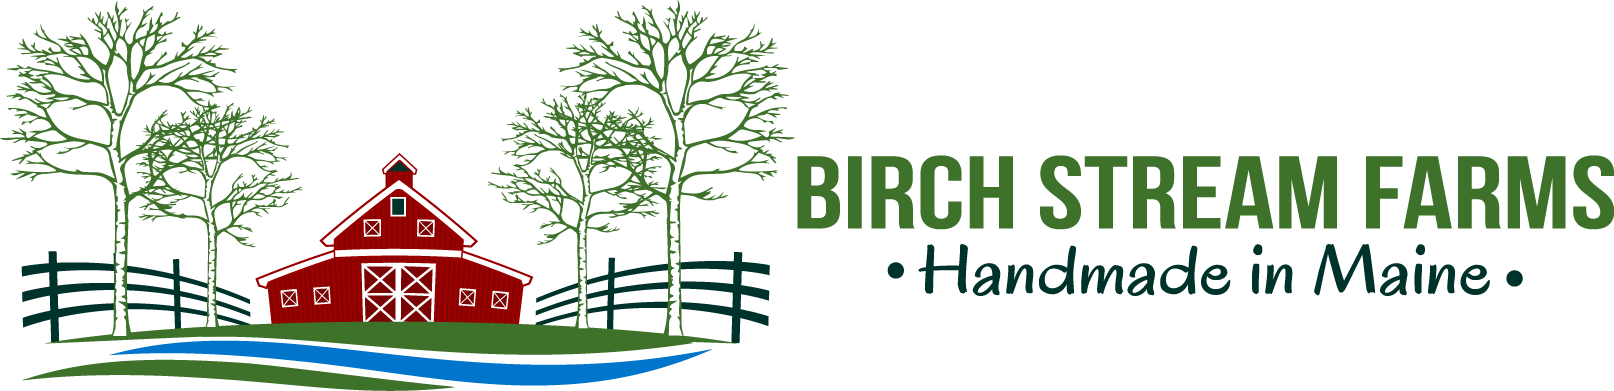 Birch Stream Farms